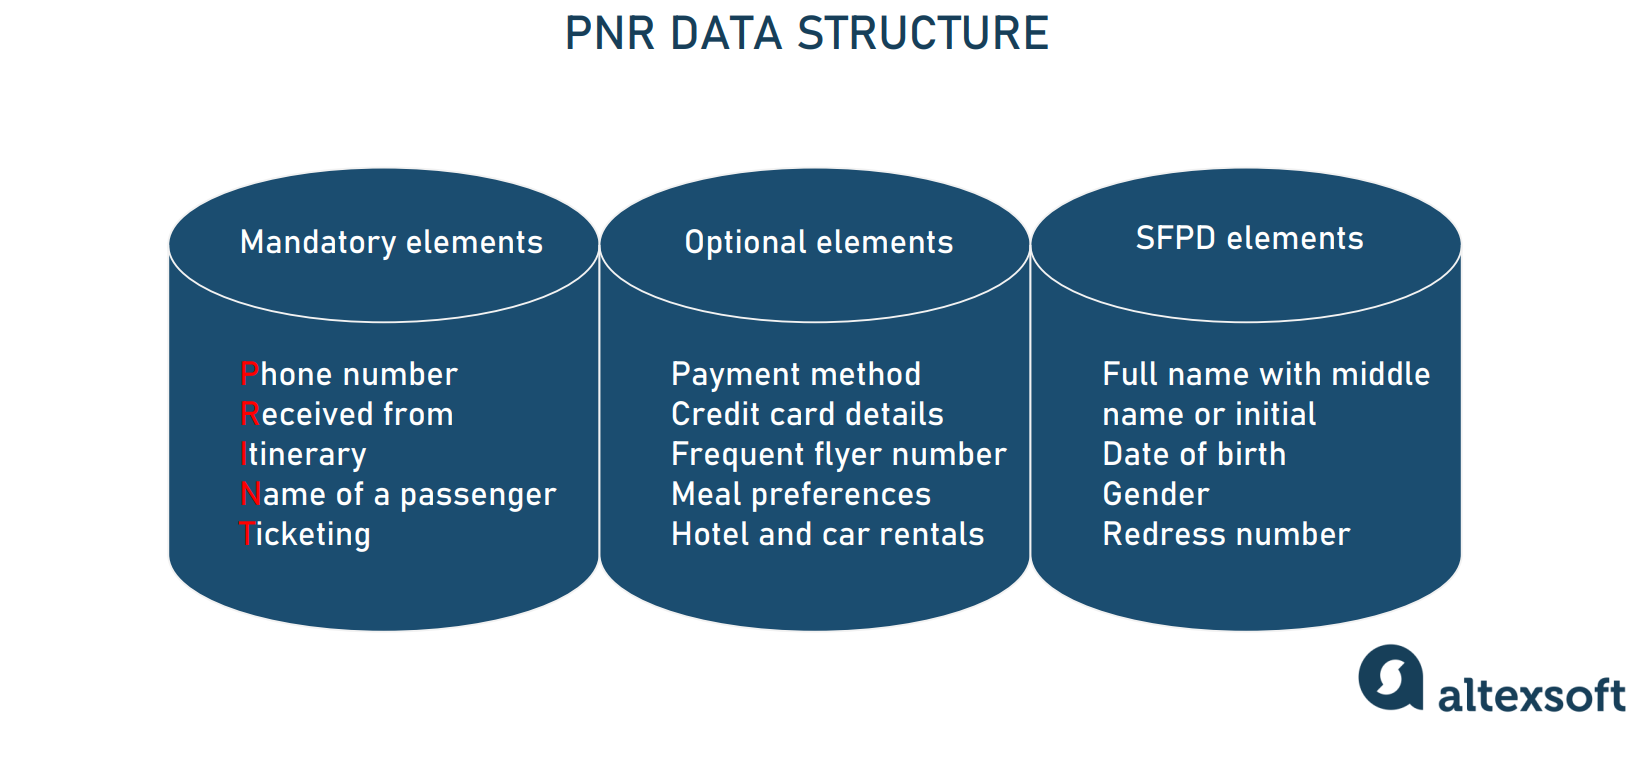 PNR data elements